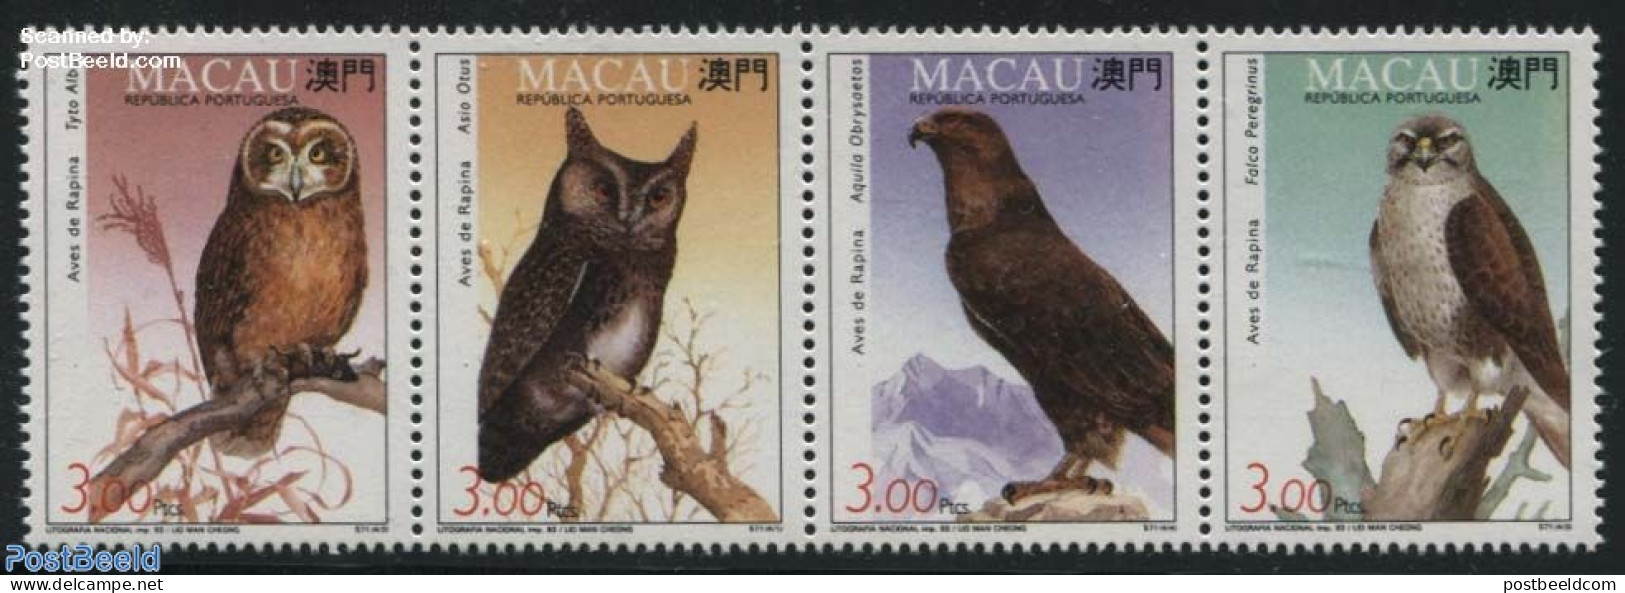 Macao 1993 Birds Of Prey 4v [:::] Or [+], Mint NH, Nature - Birds - Birds Of Prey - Owls - Ungebraucht